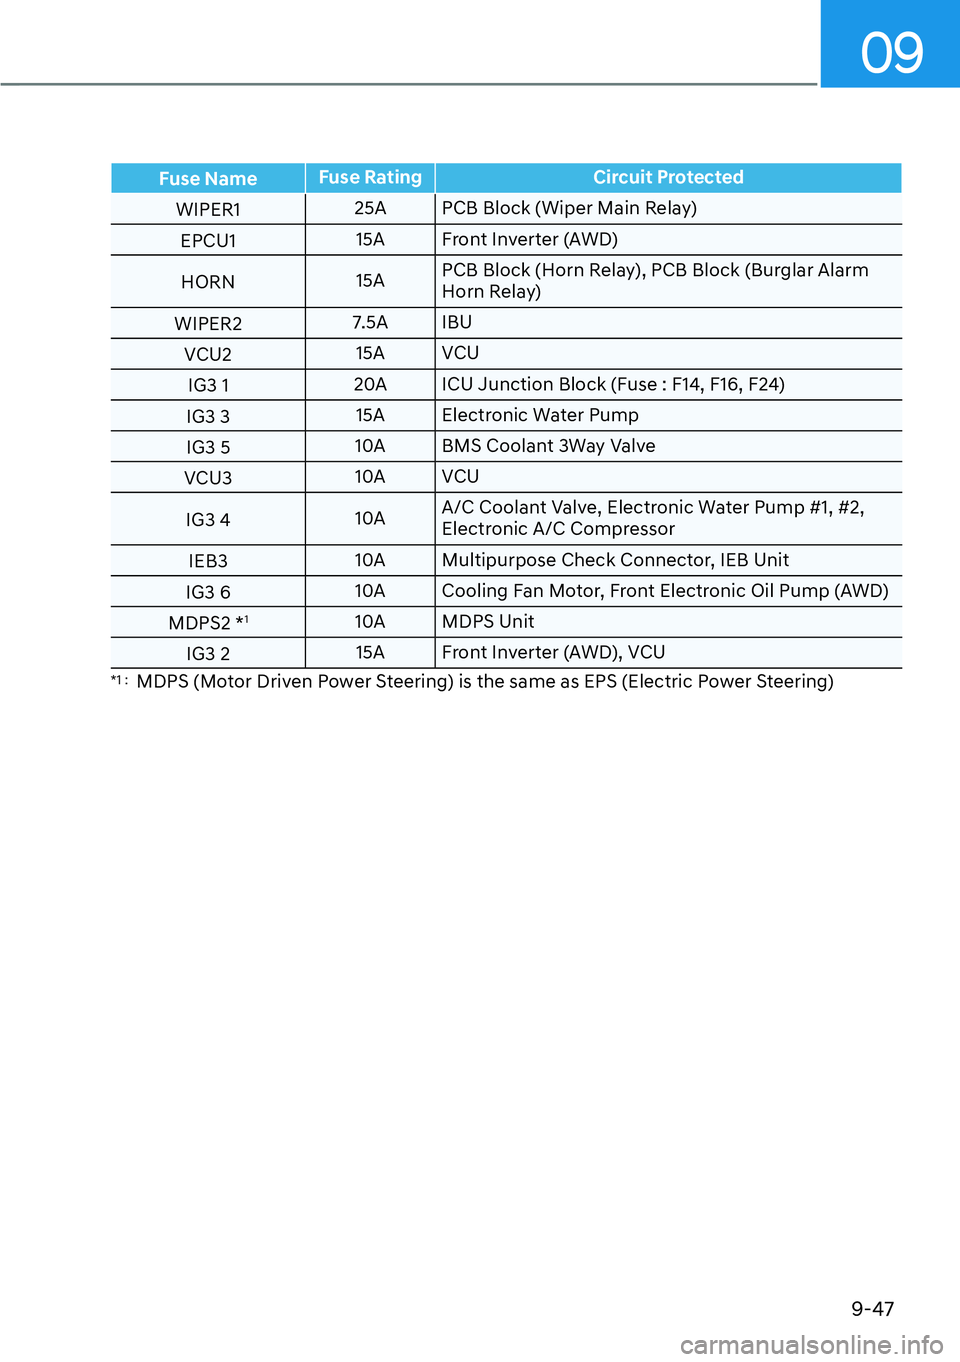 HYUNDAI IONIQ 5 2022  Owners Manual 09
9-47
Fuse NameFuse Rating Circuit Protected
WIPER125A PCB Block (Wiper Main Relay)
EPCU115A Front Inverter (AWD)
HORN15APCB Block (Horn Relay), PCB Block (Burglar Alarm 
Horn Relay)
WIPER27.5A IBU
